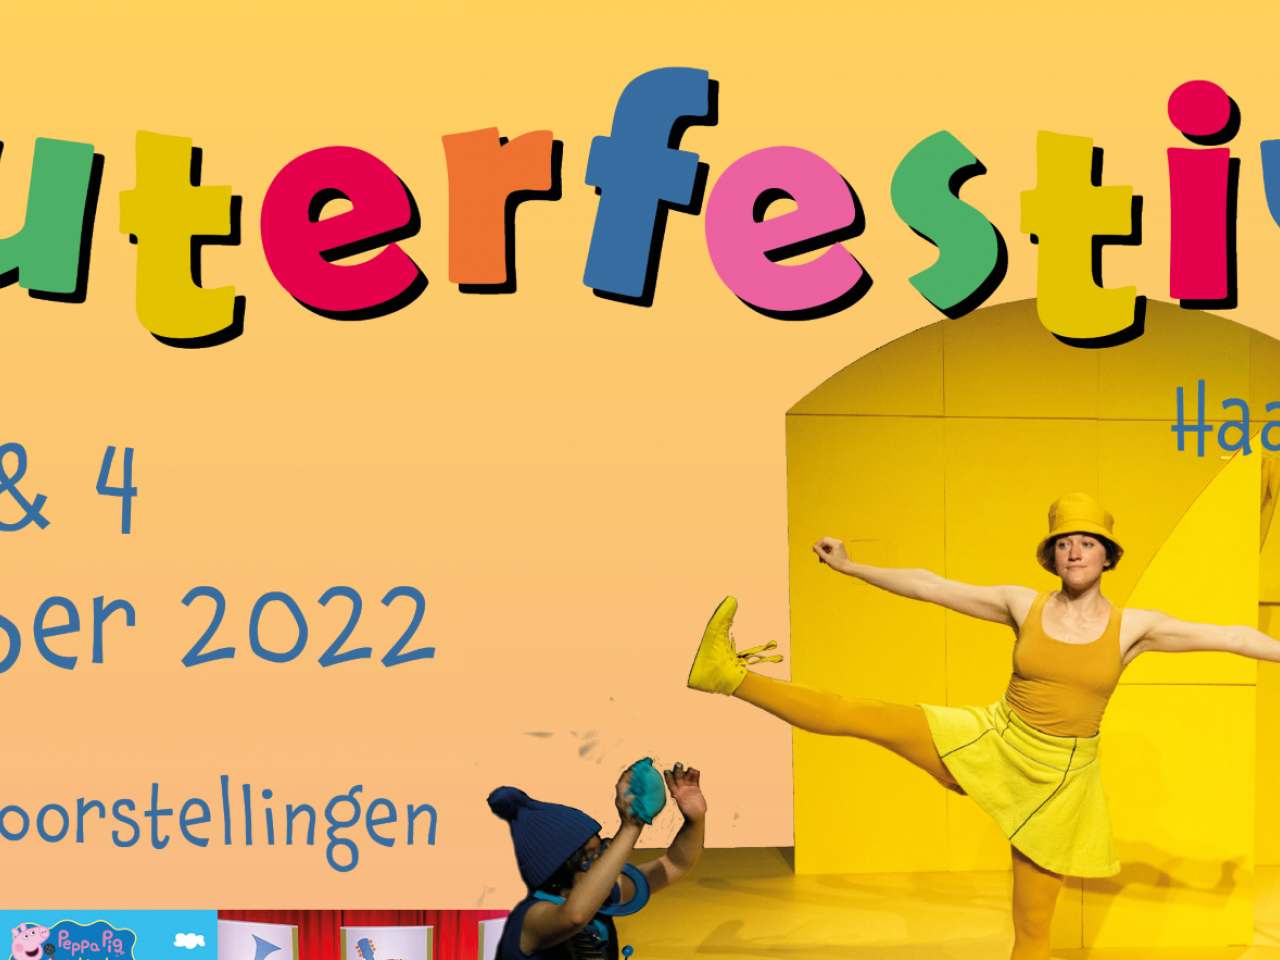 Peuterfestival Haarlemmermeer